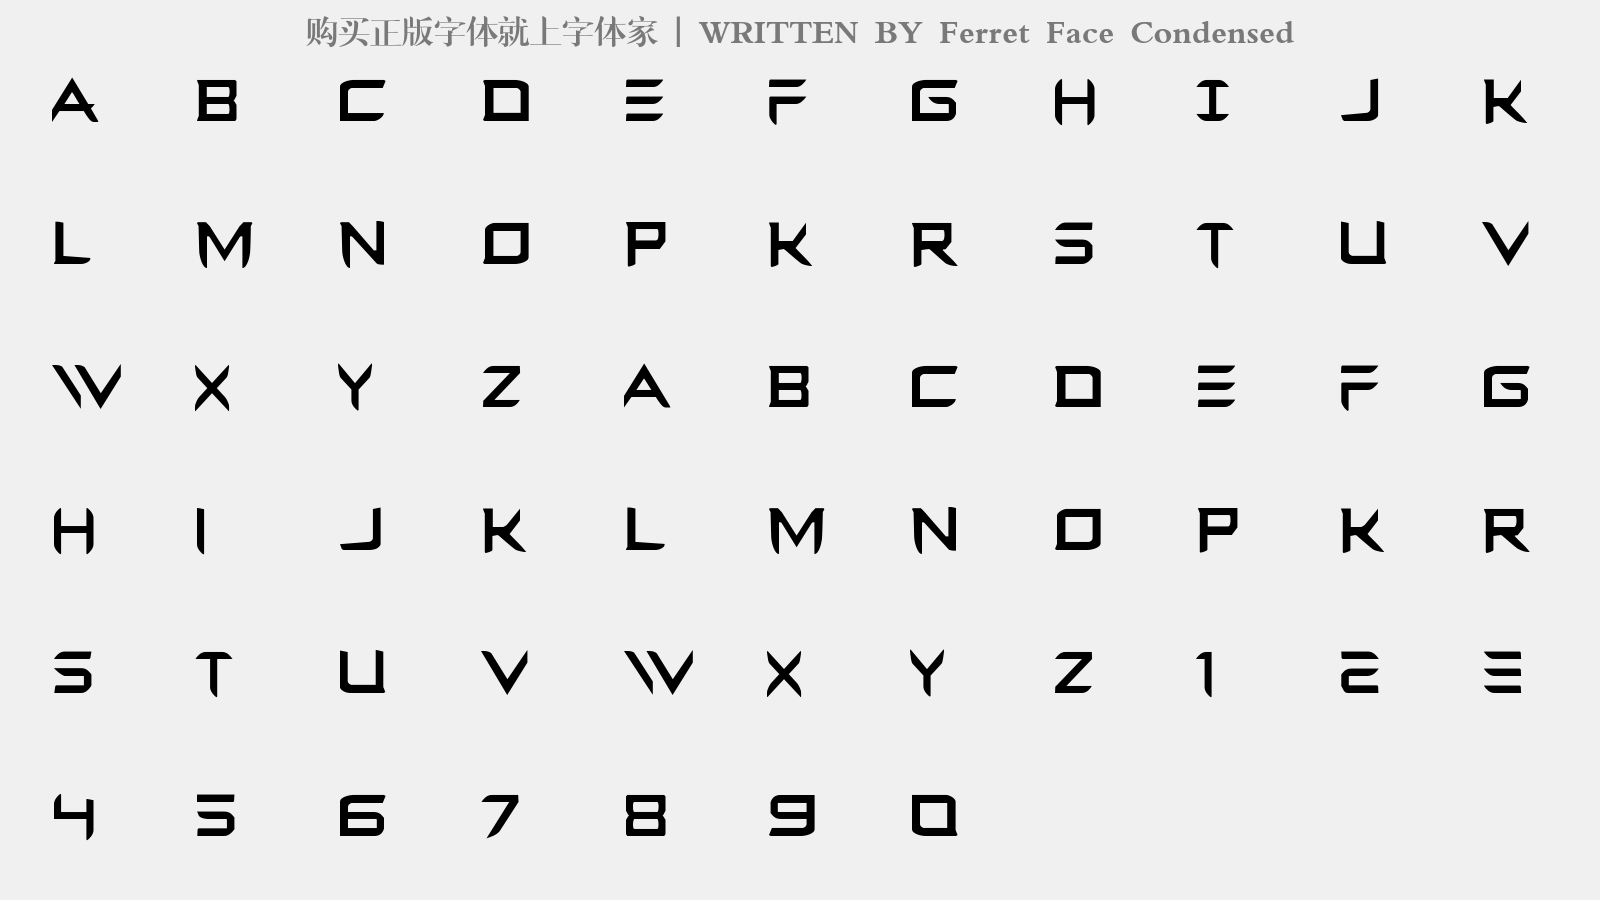 Ferret Face Condensed - 大写字母/小写字母/数字